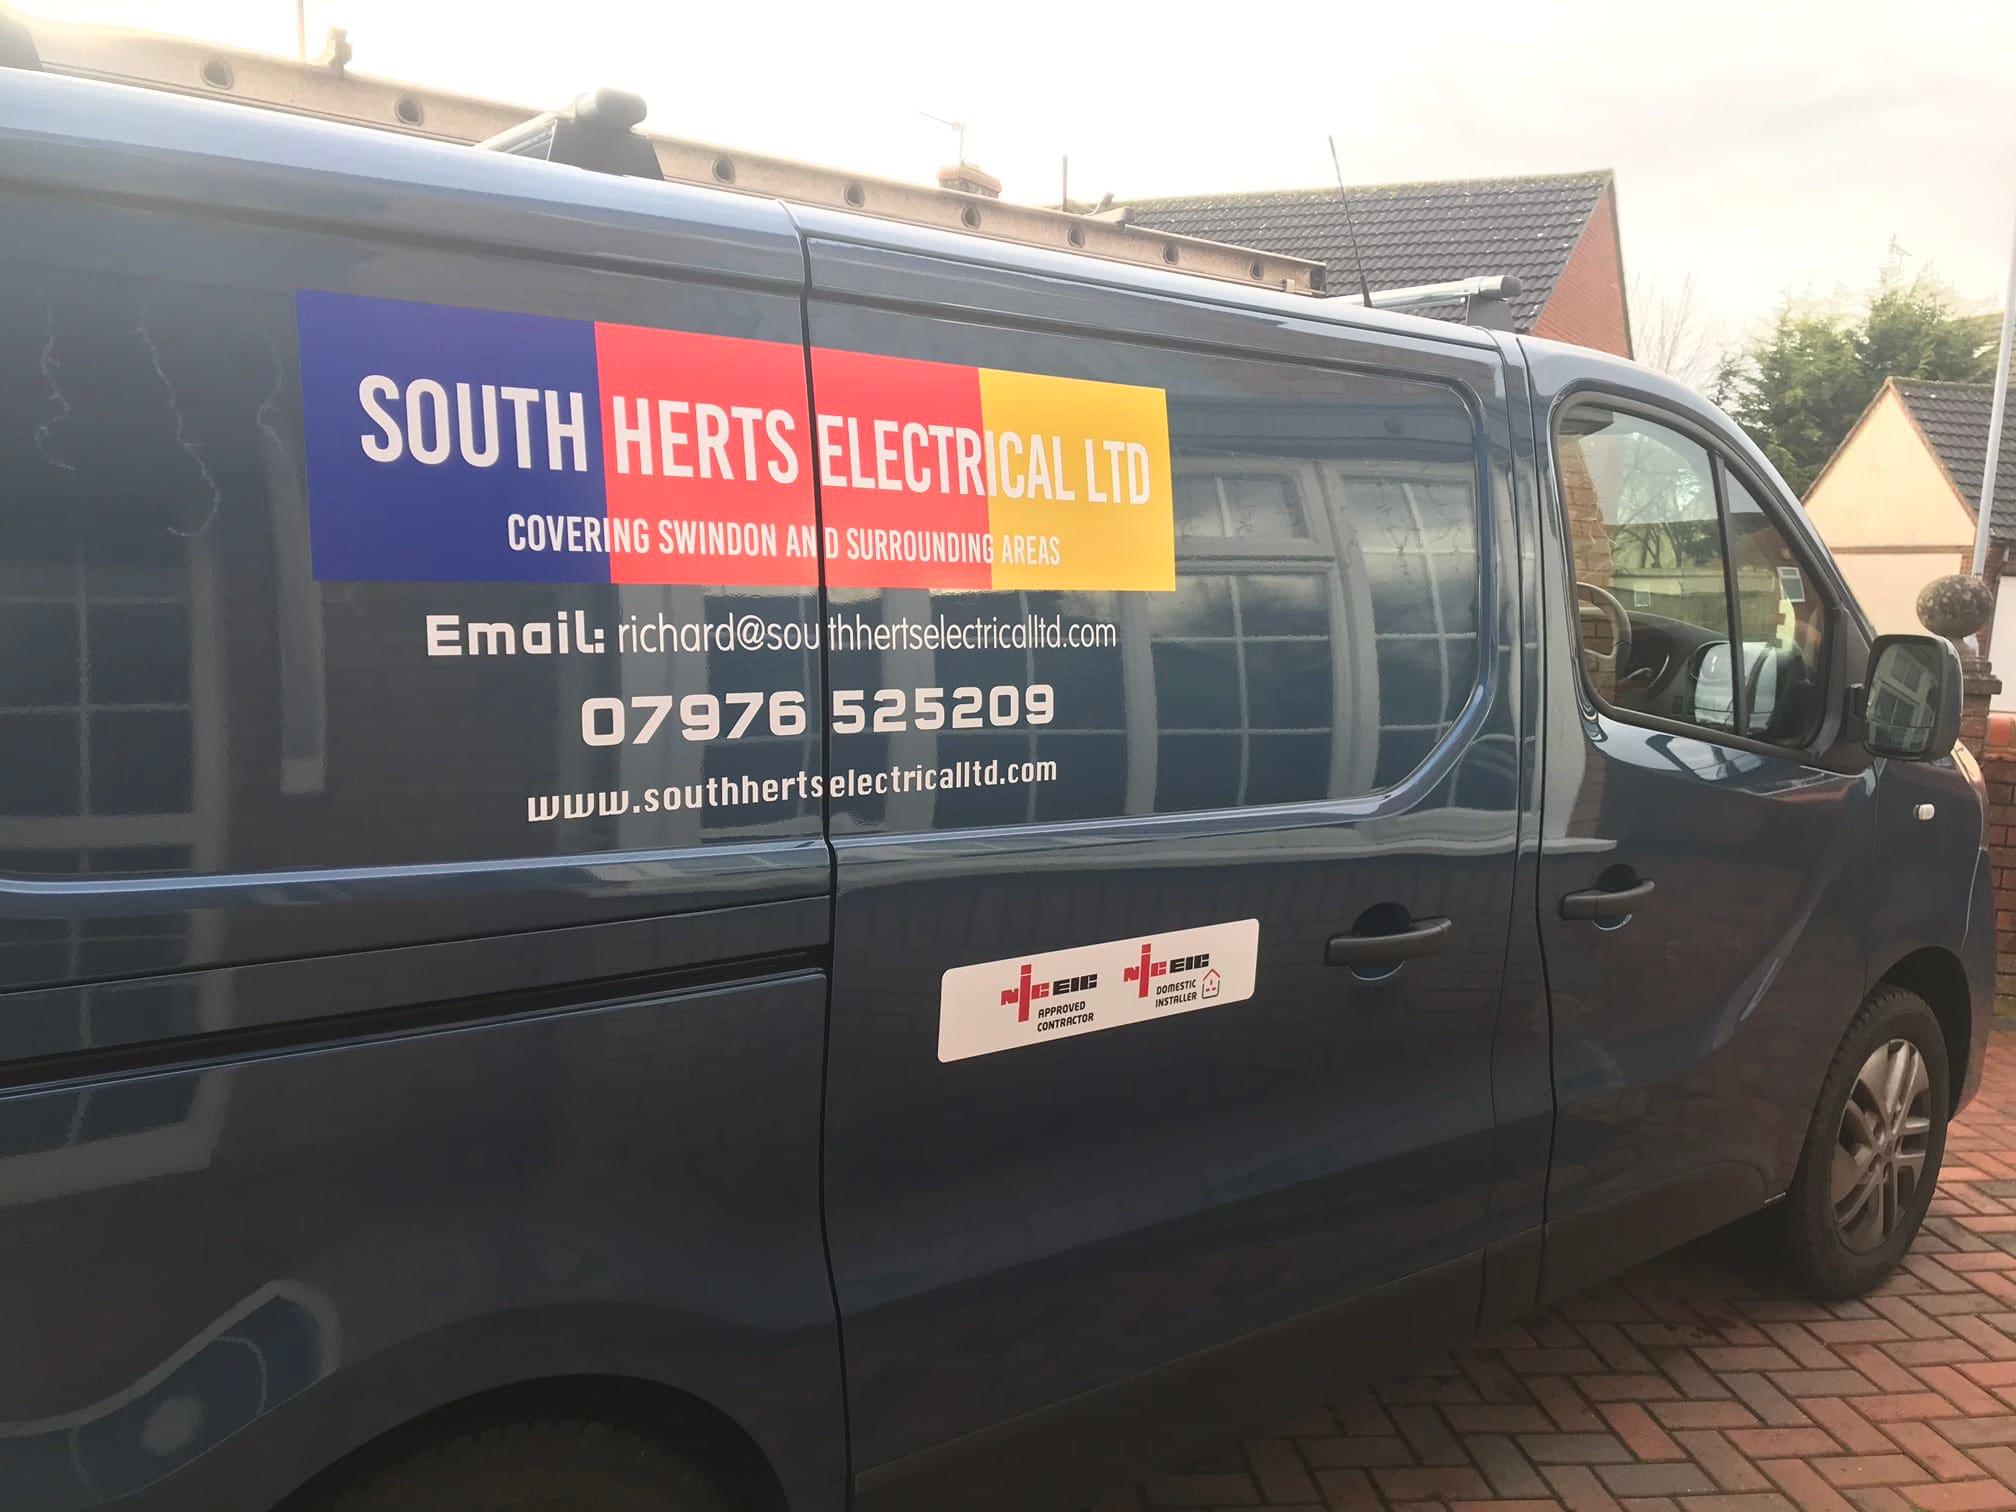 South Herts Electrical Ltd Swindon 07976 525209